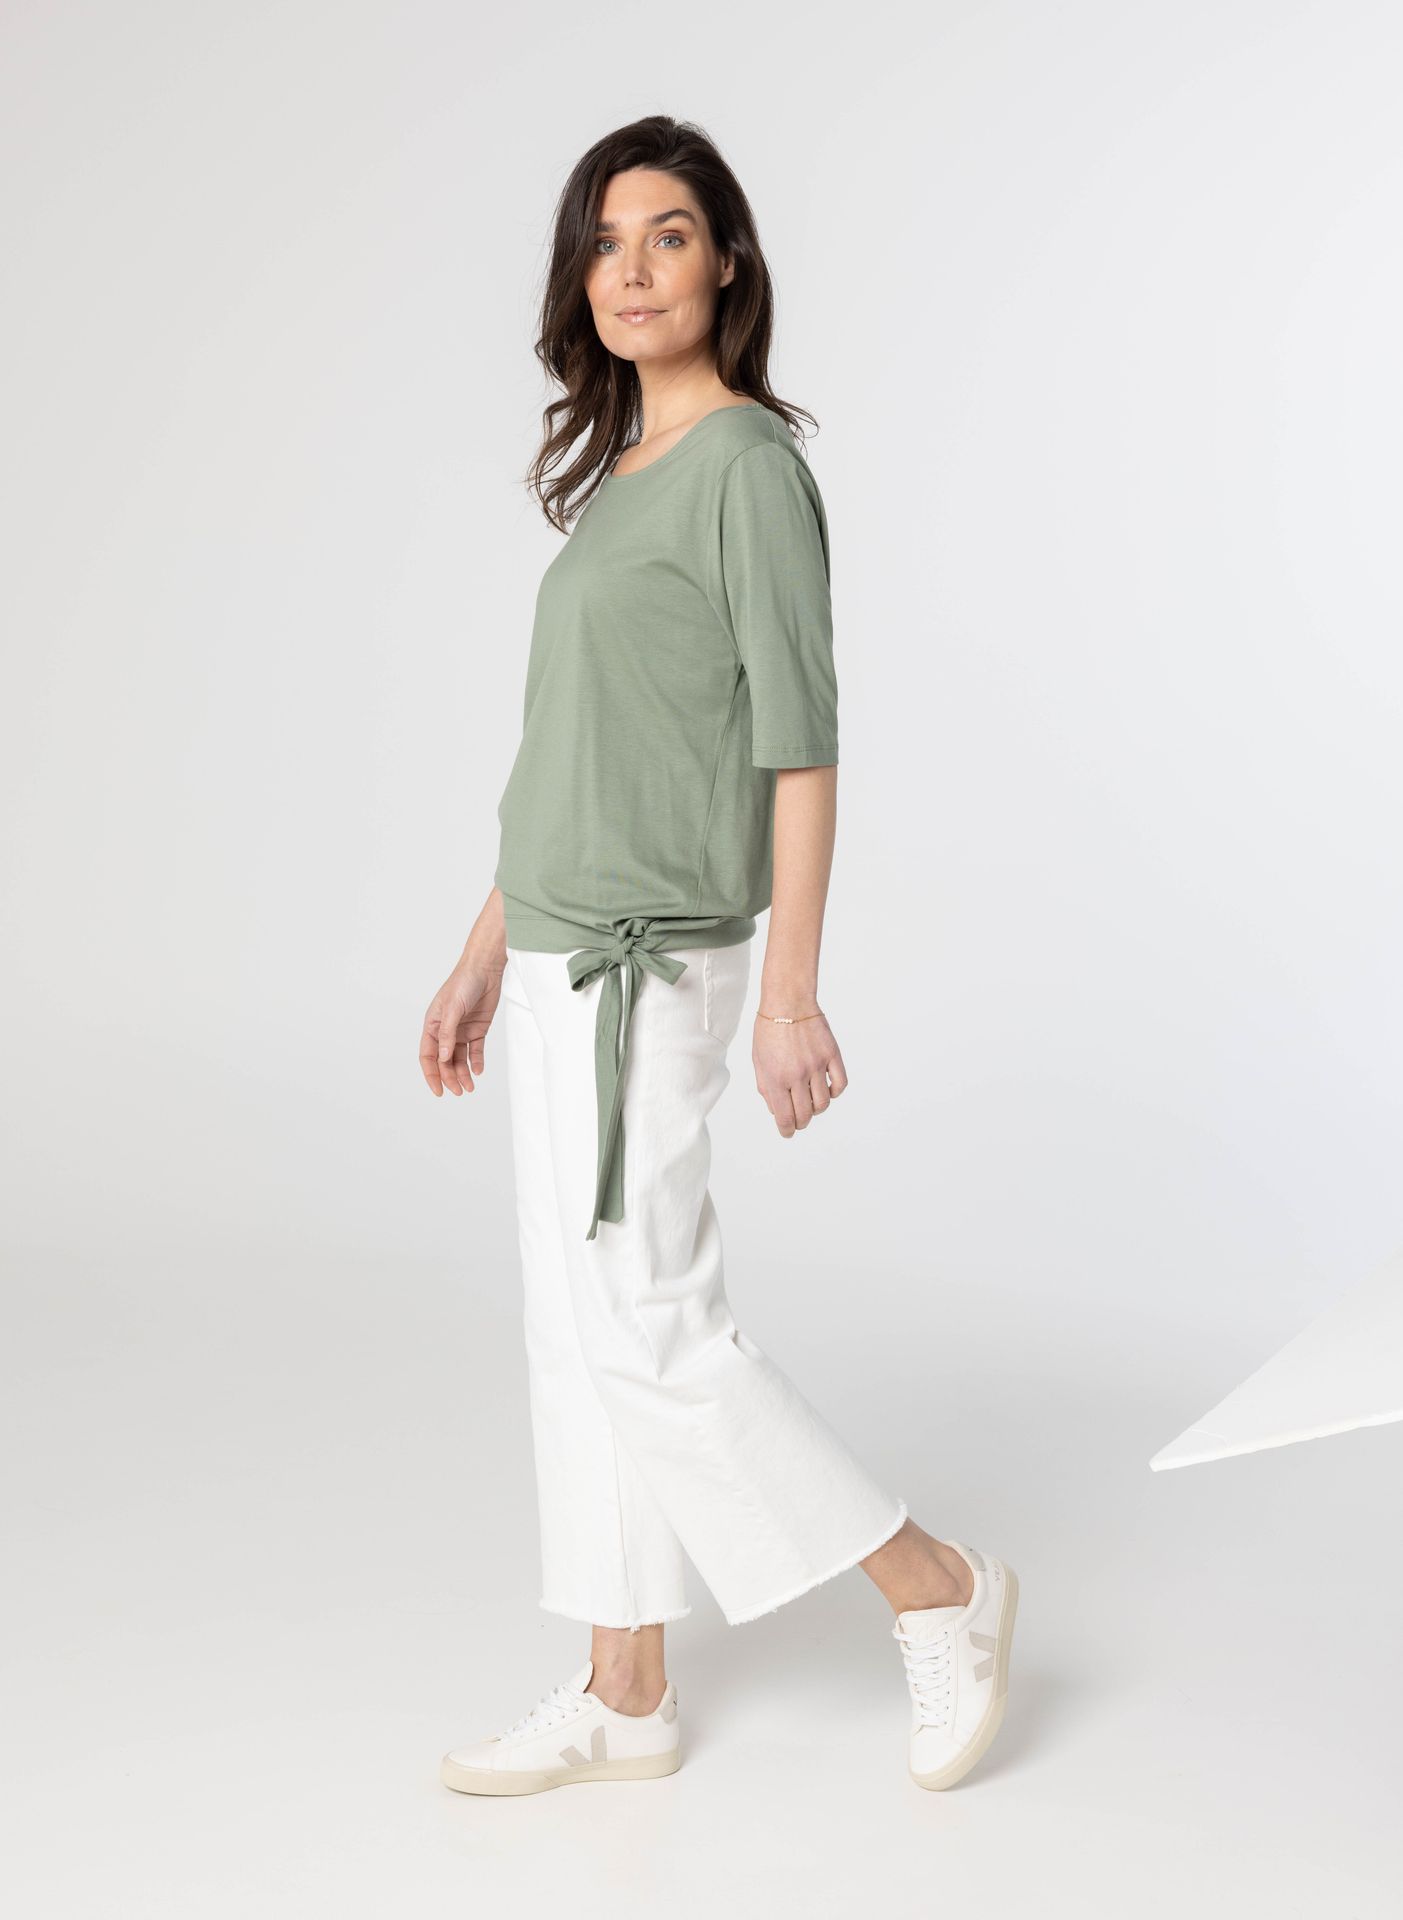 Norah Groen shirt met strik green/grey 209993-540